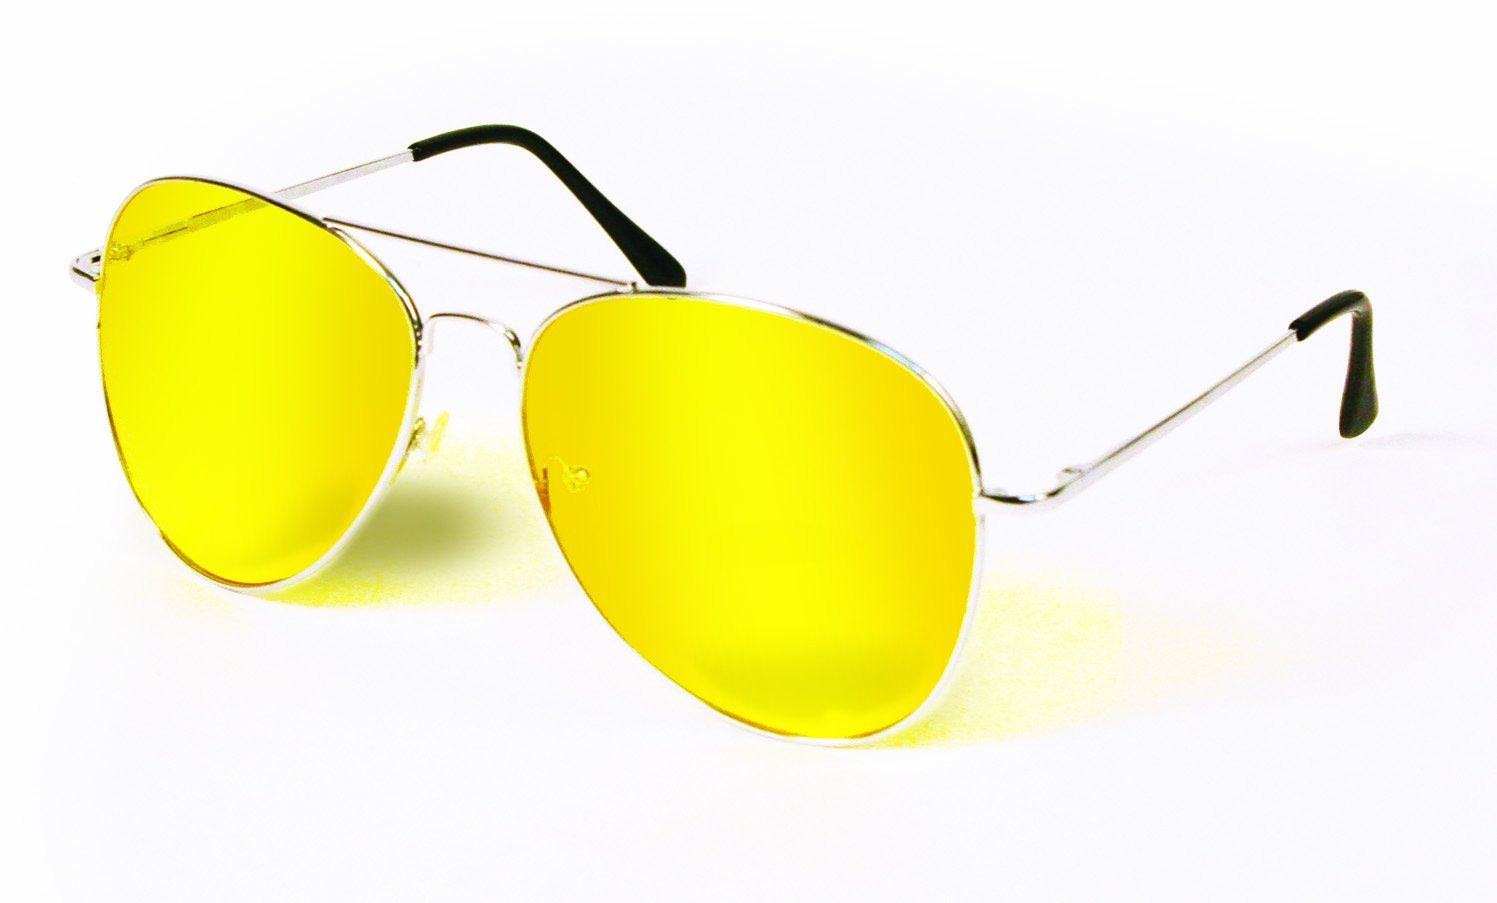 Night View Nv-1000 Glare Reduction Glasses, Yellow